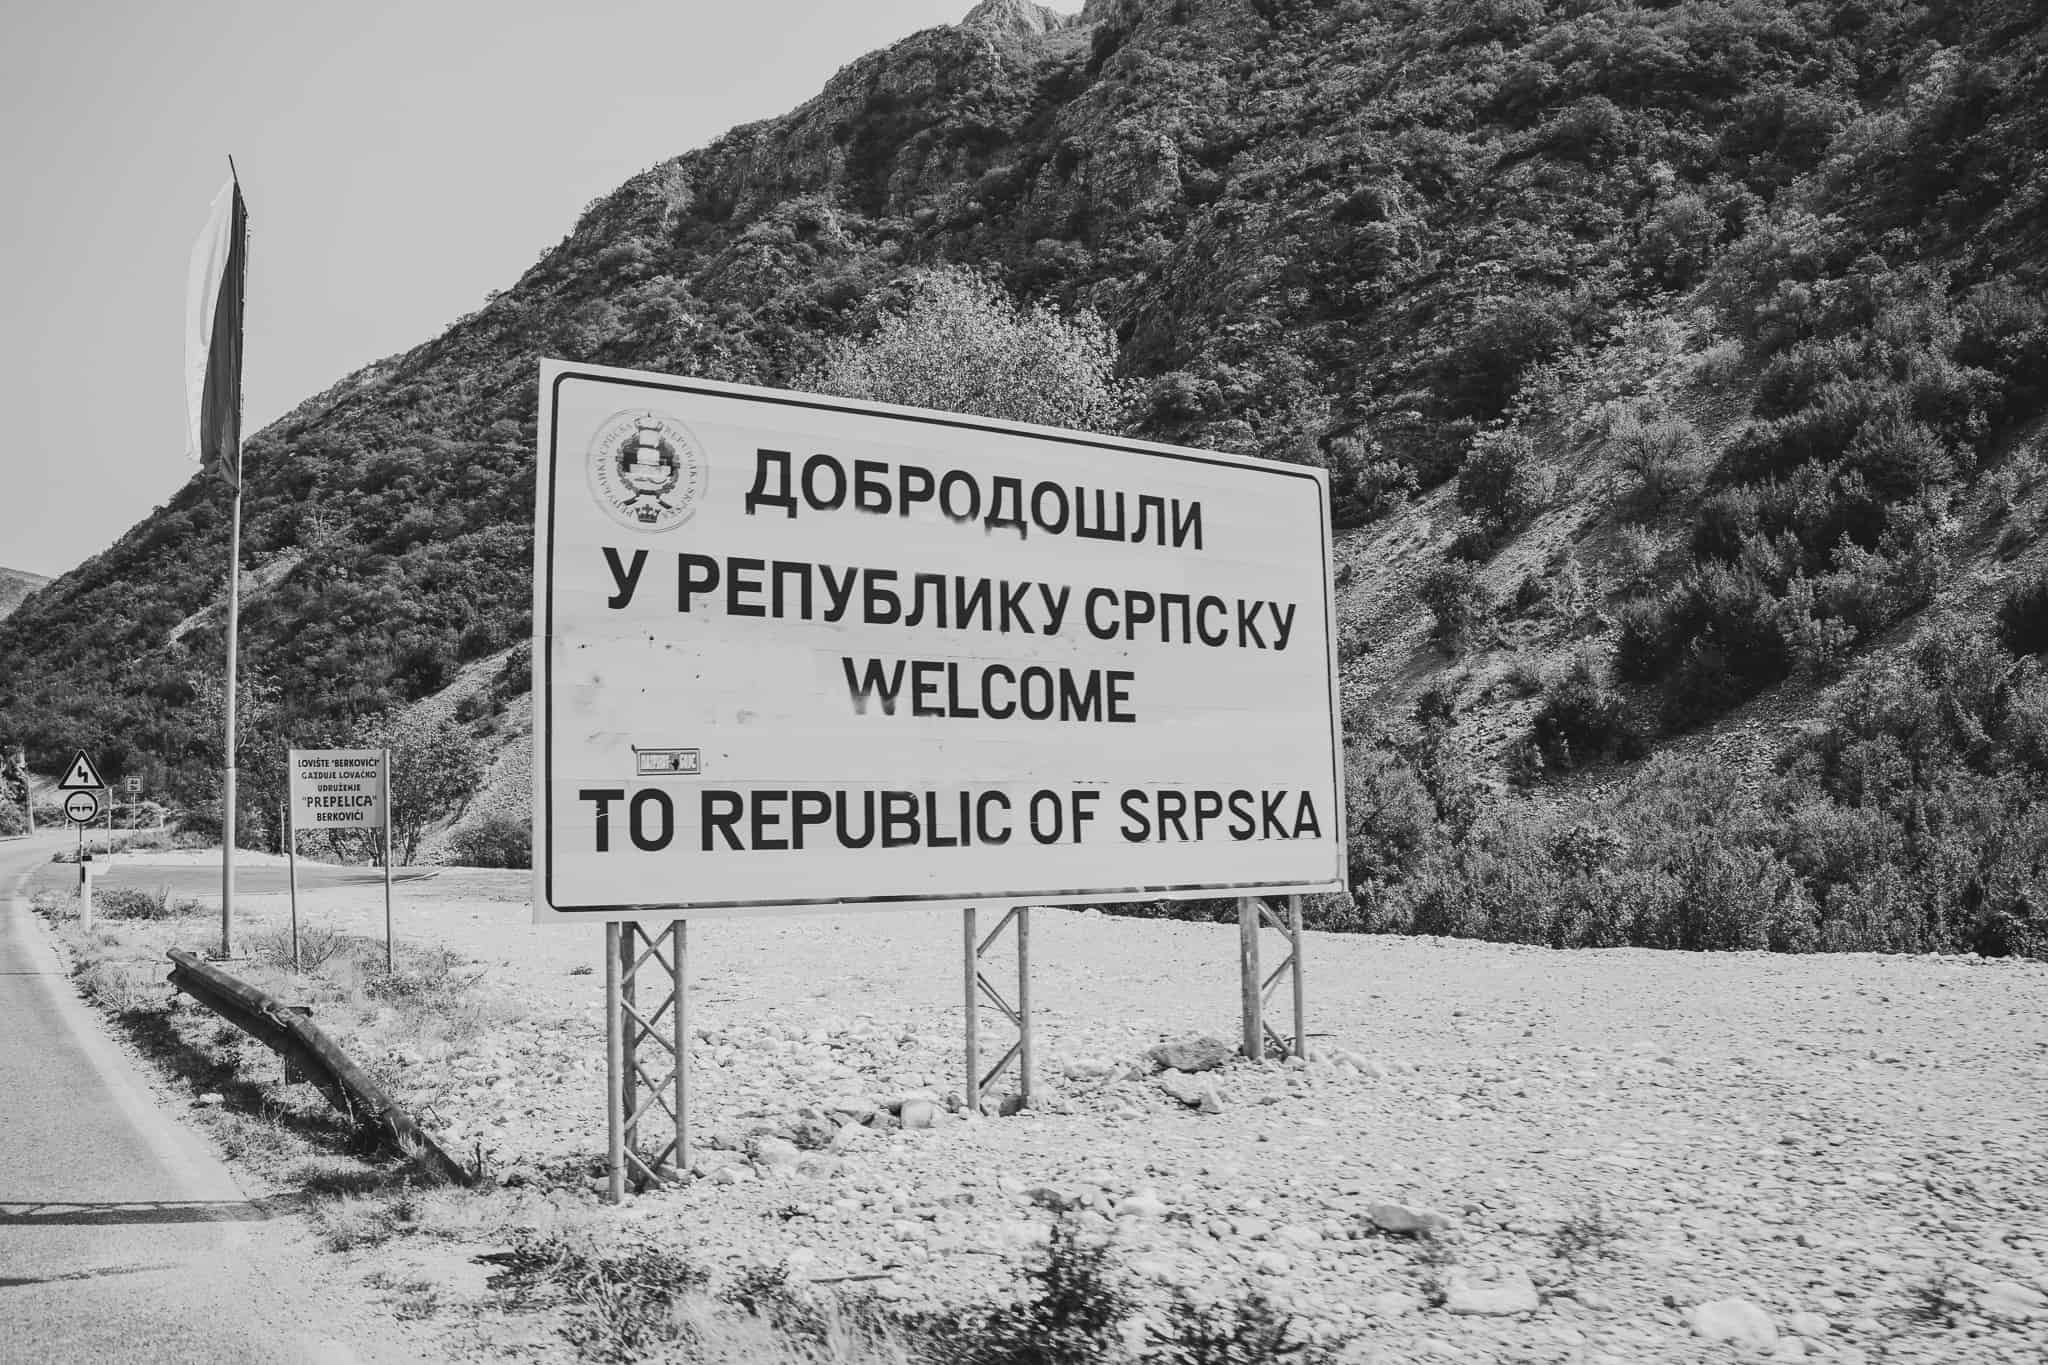 A welcome sign to Republika Srpska in Bosnia and Herzegovina